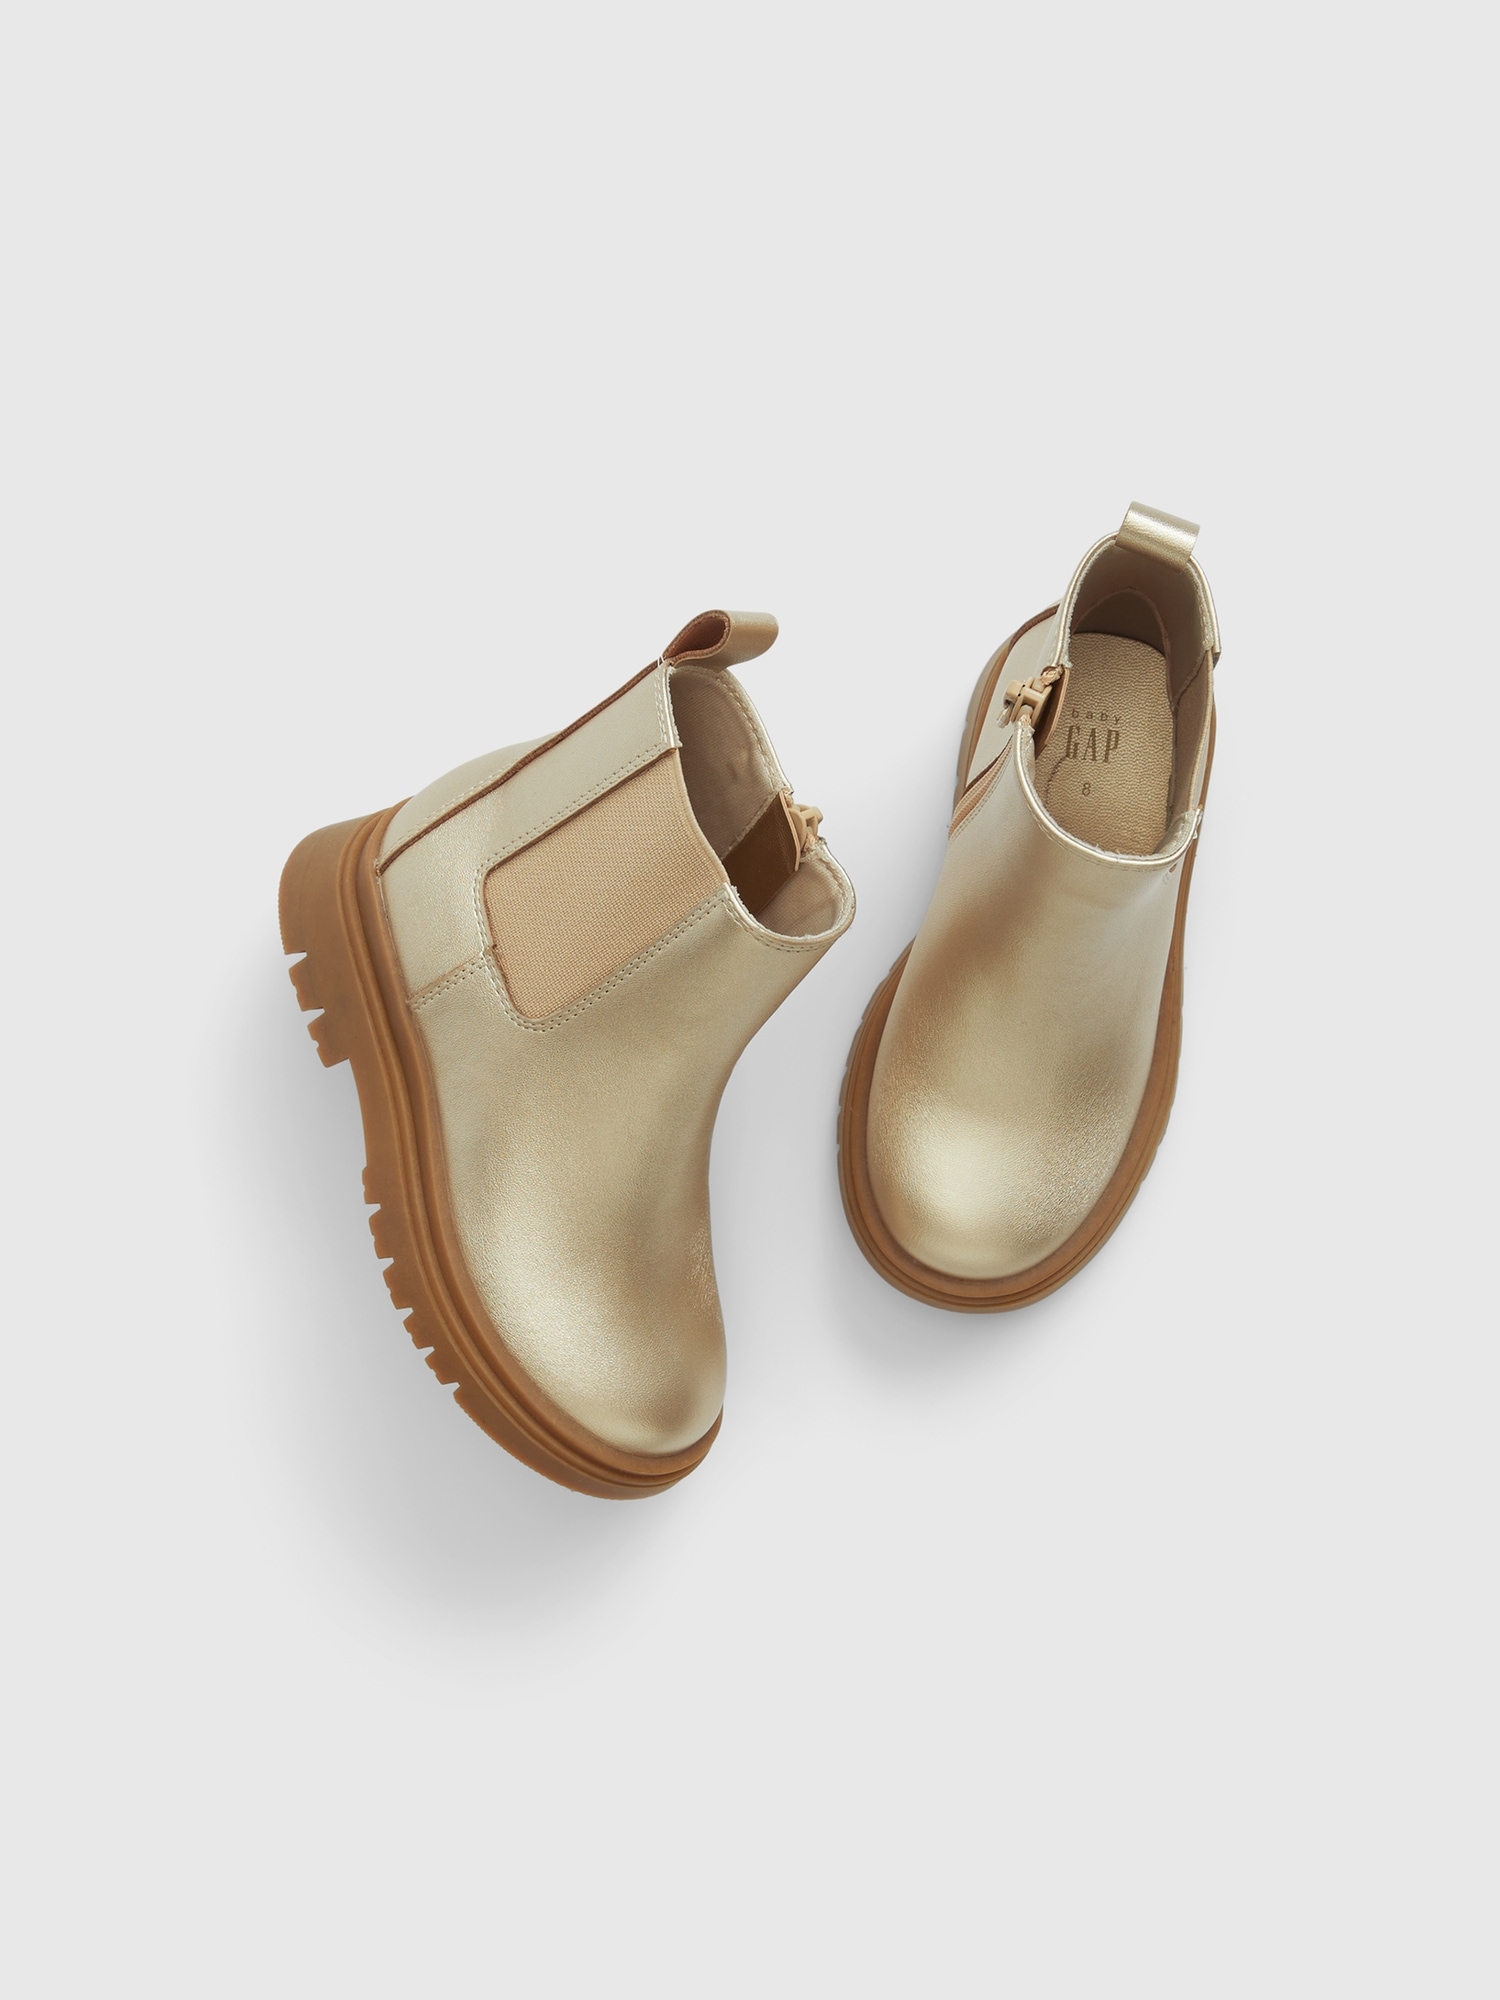 Toddler Metallic Ankle Boots | Gap